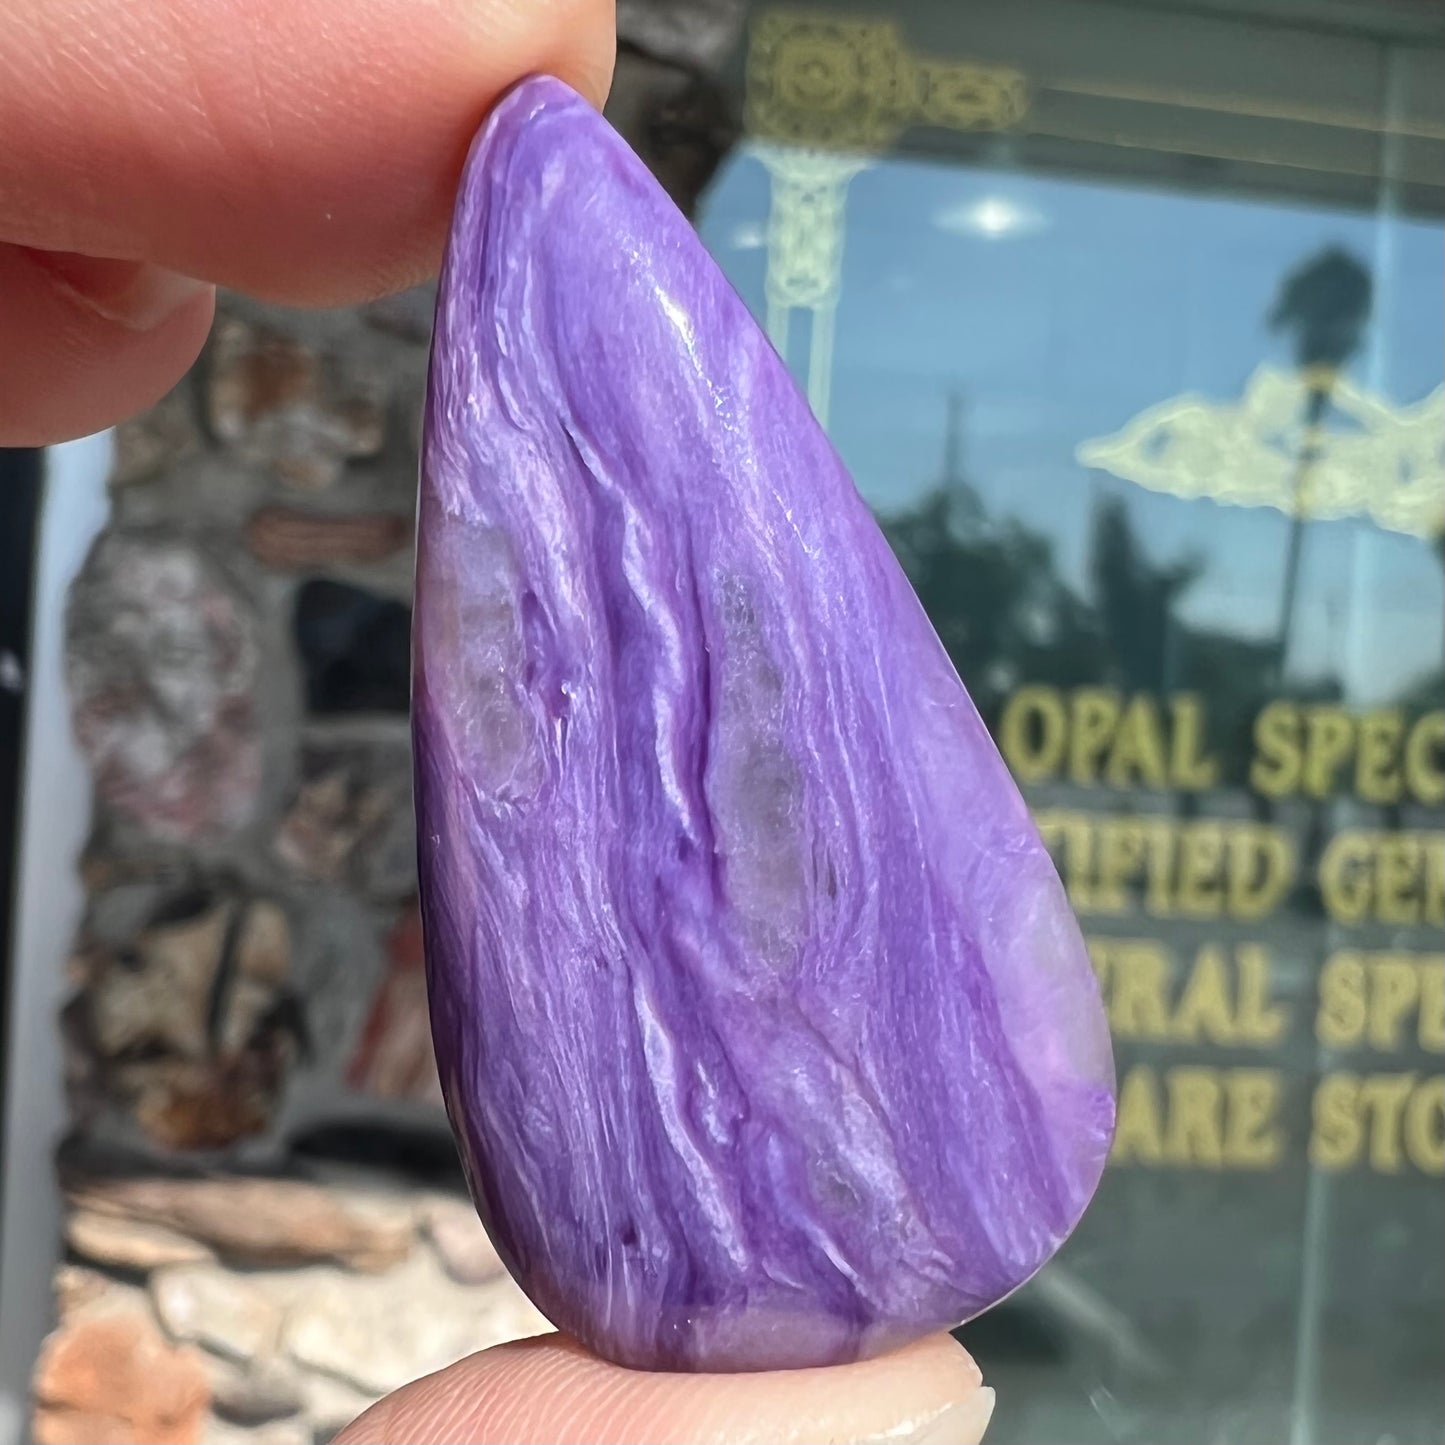 A pear shaped cabochon cut purple charoite stone.